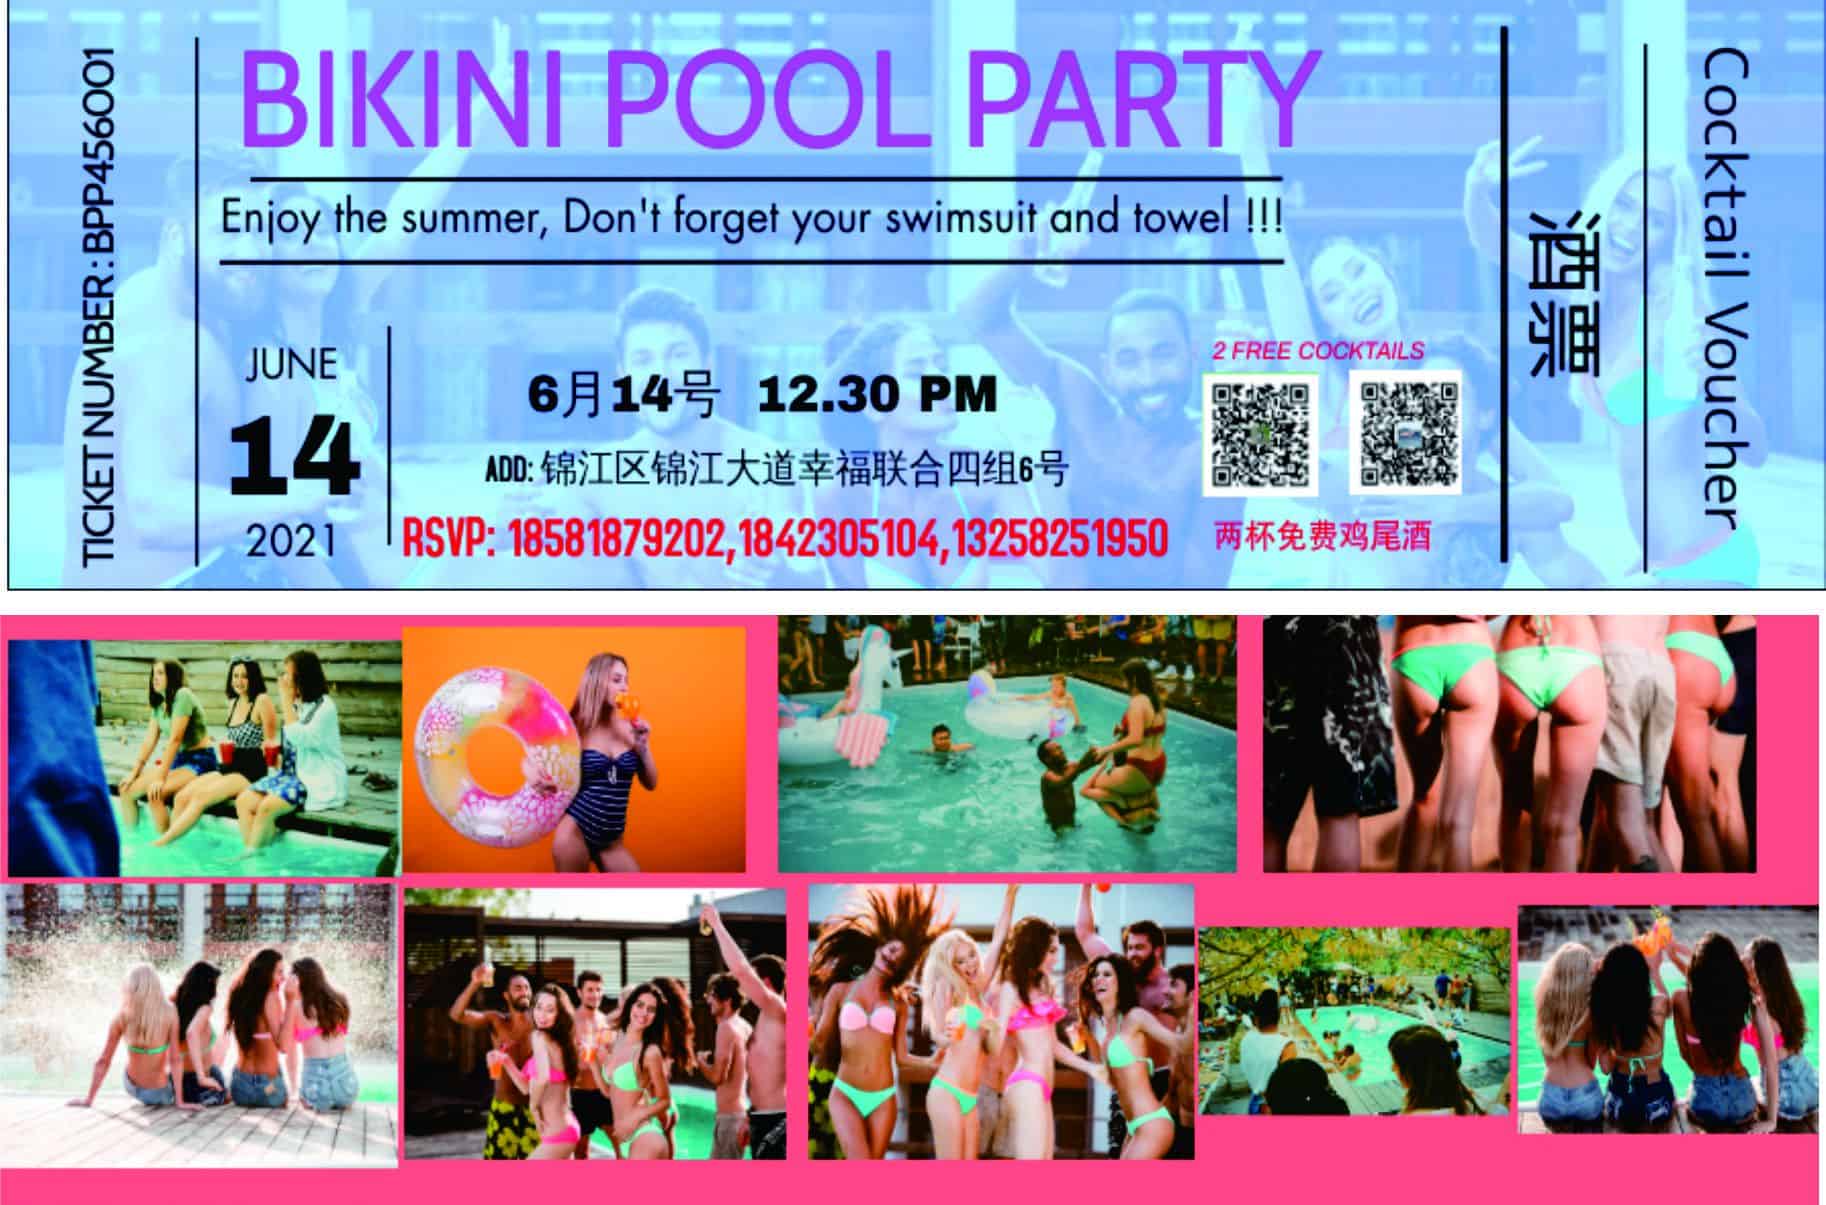 Bikini pool party chengdu expat